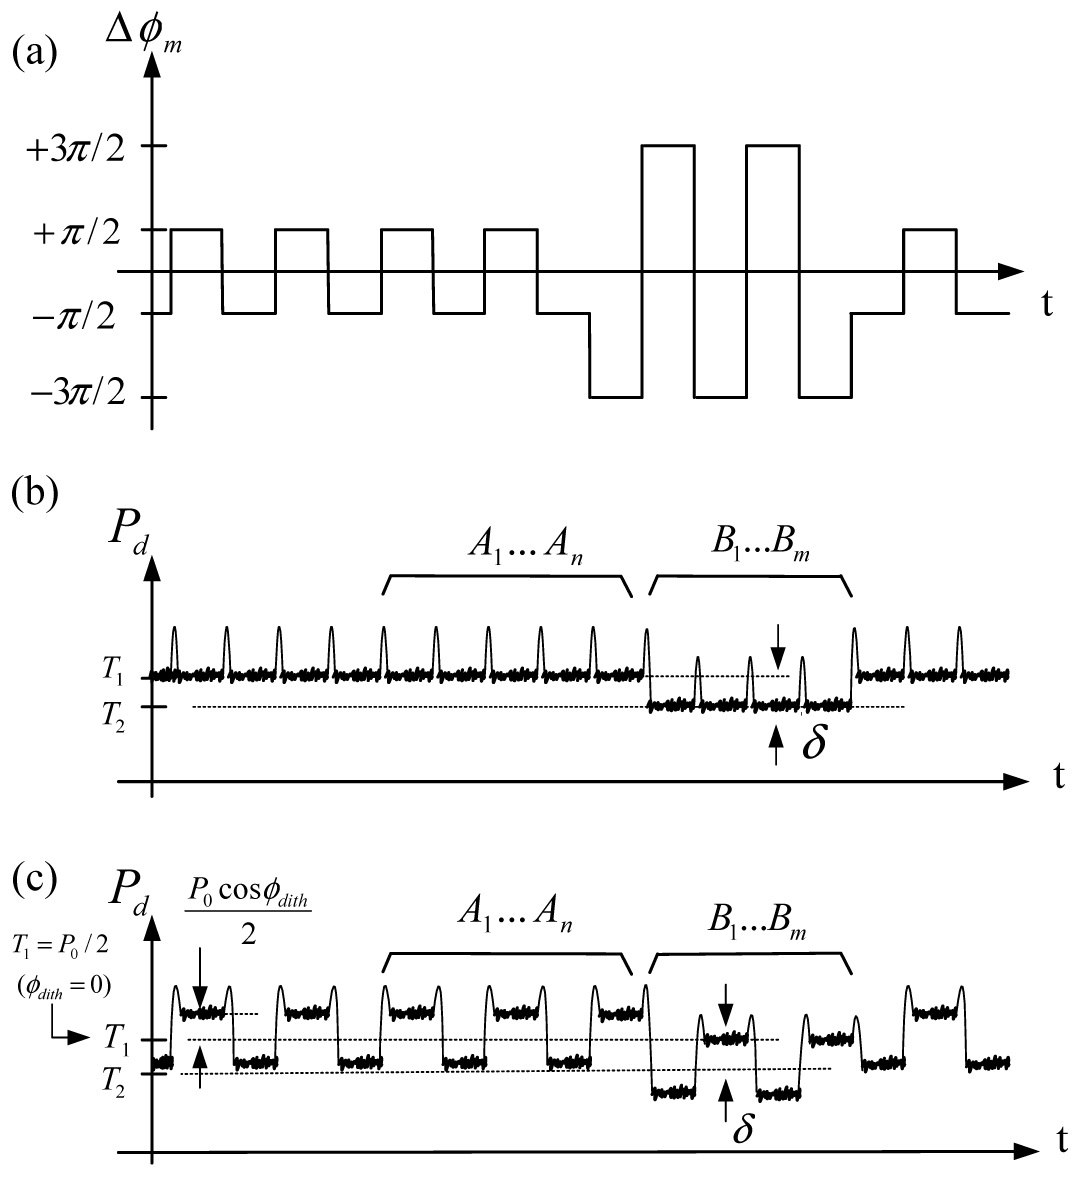 (a) Phase modulation steps (b) photodetector output without dithering (c) photodetector output with dithering.